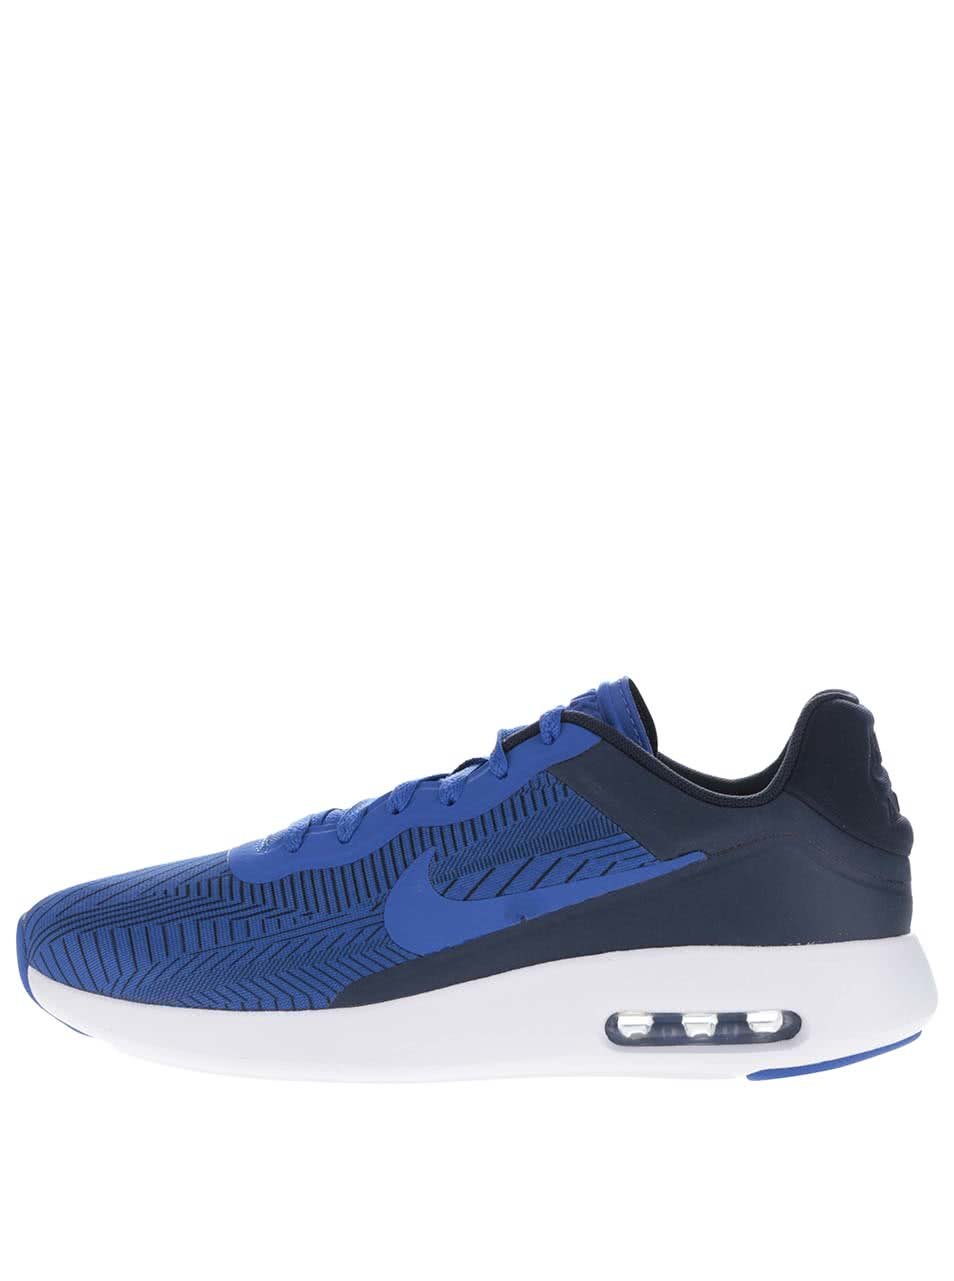 Modré pánské tenisky Nike Air Max